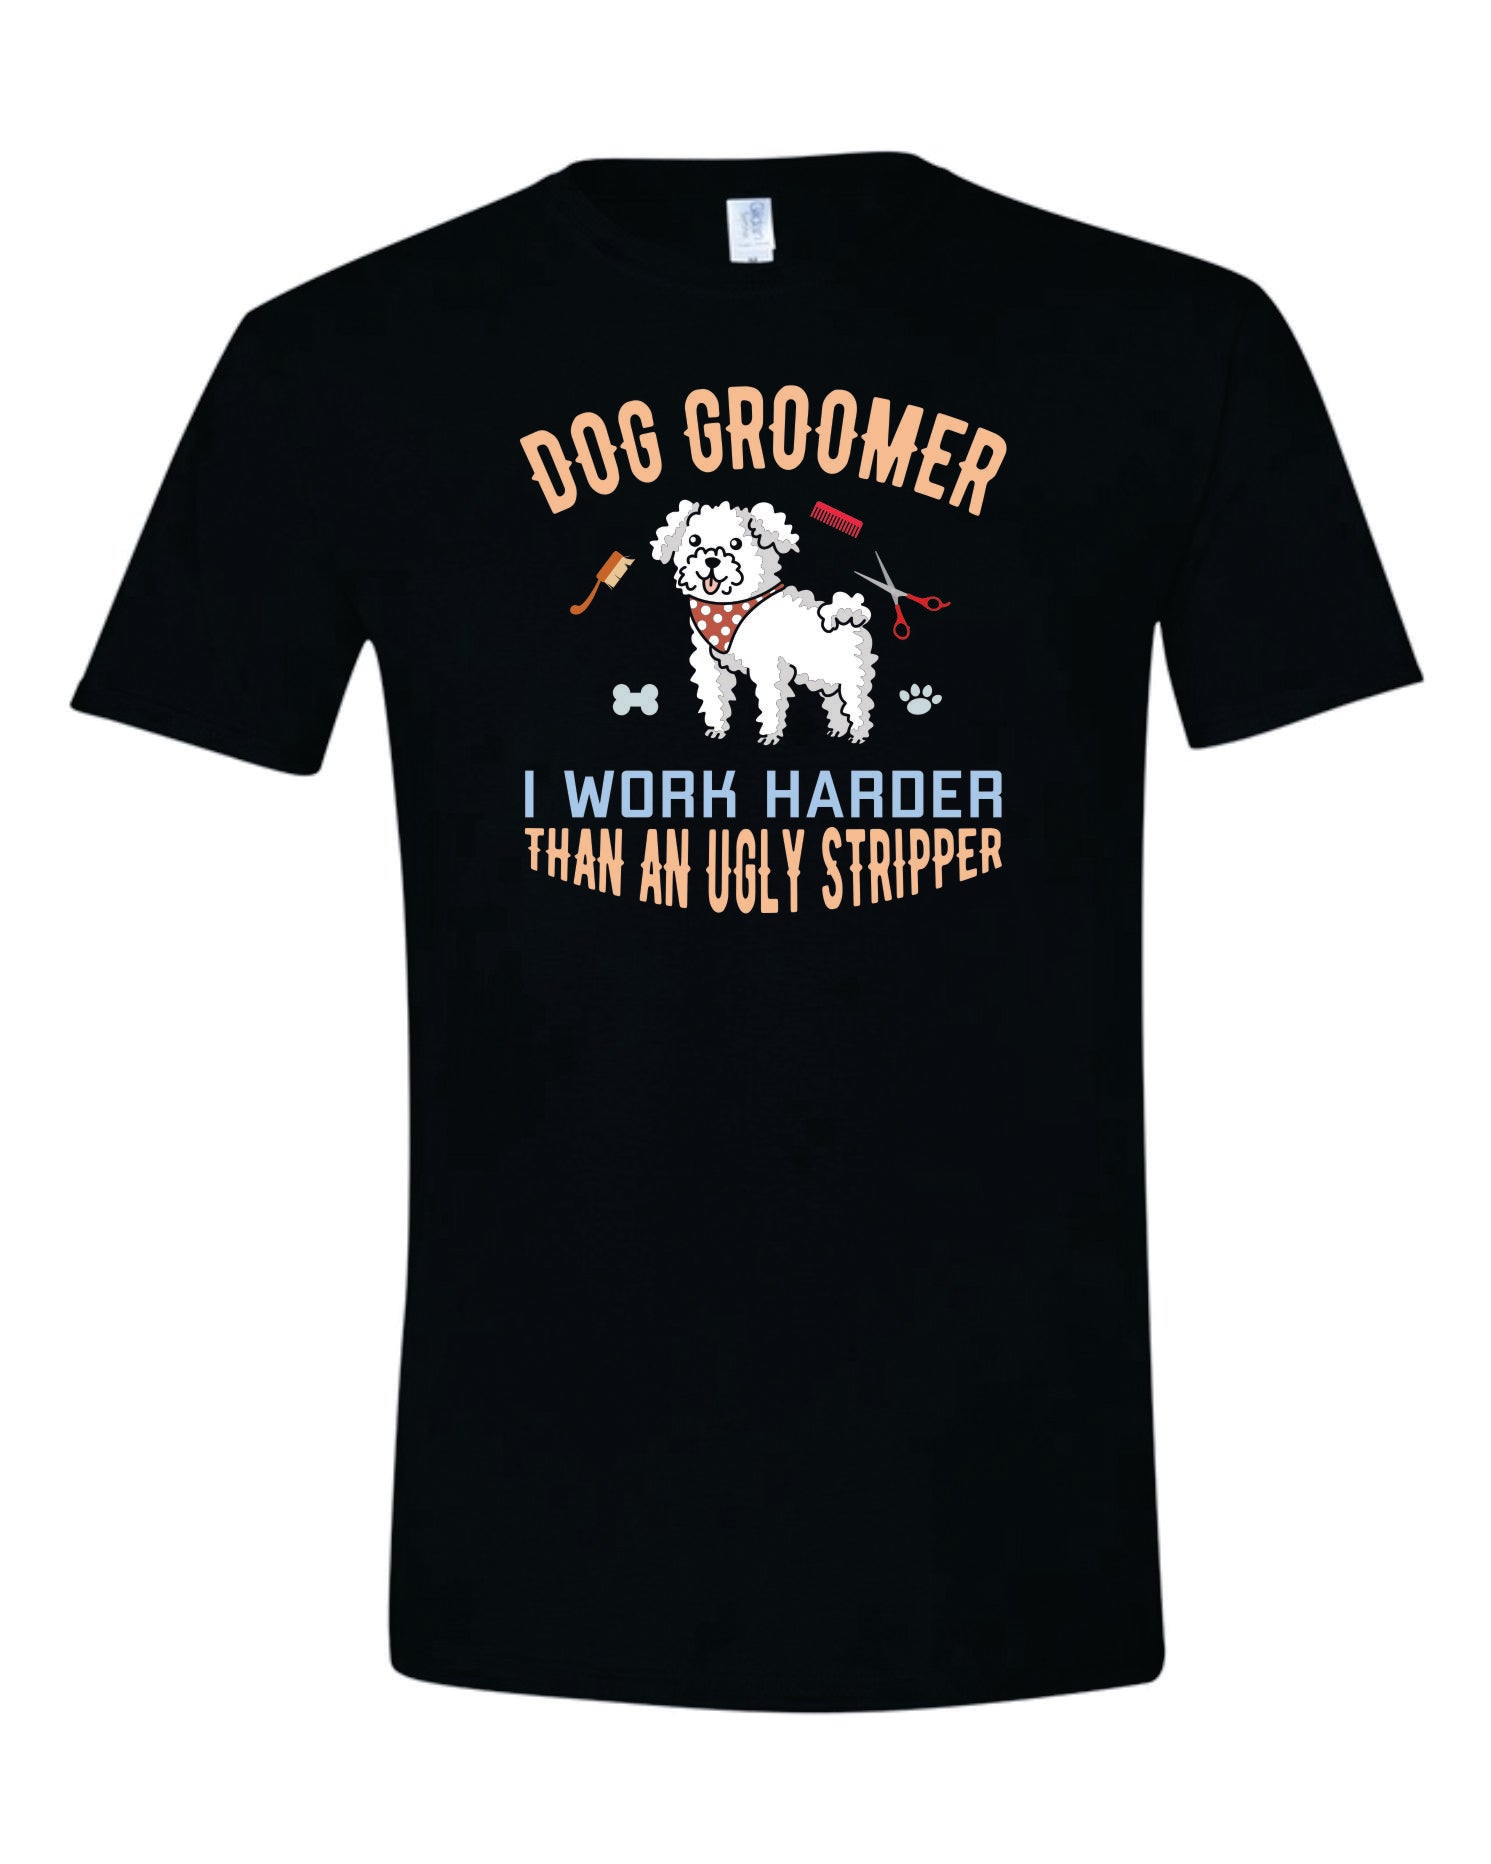 Dog Groomer Humorous Shirt - Works Harder Than Ugly Stripper